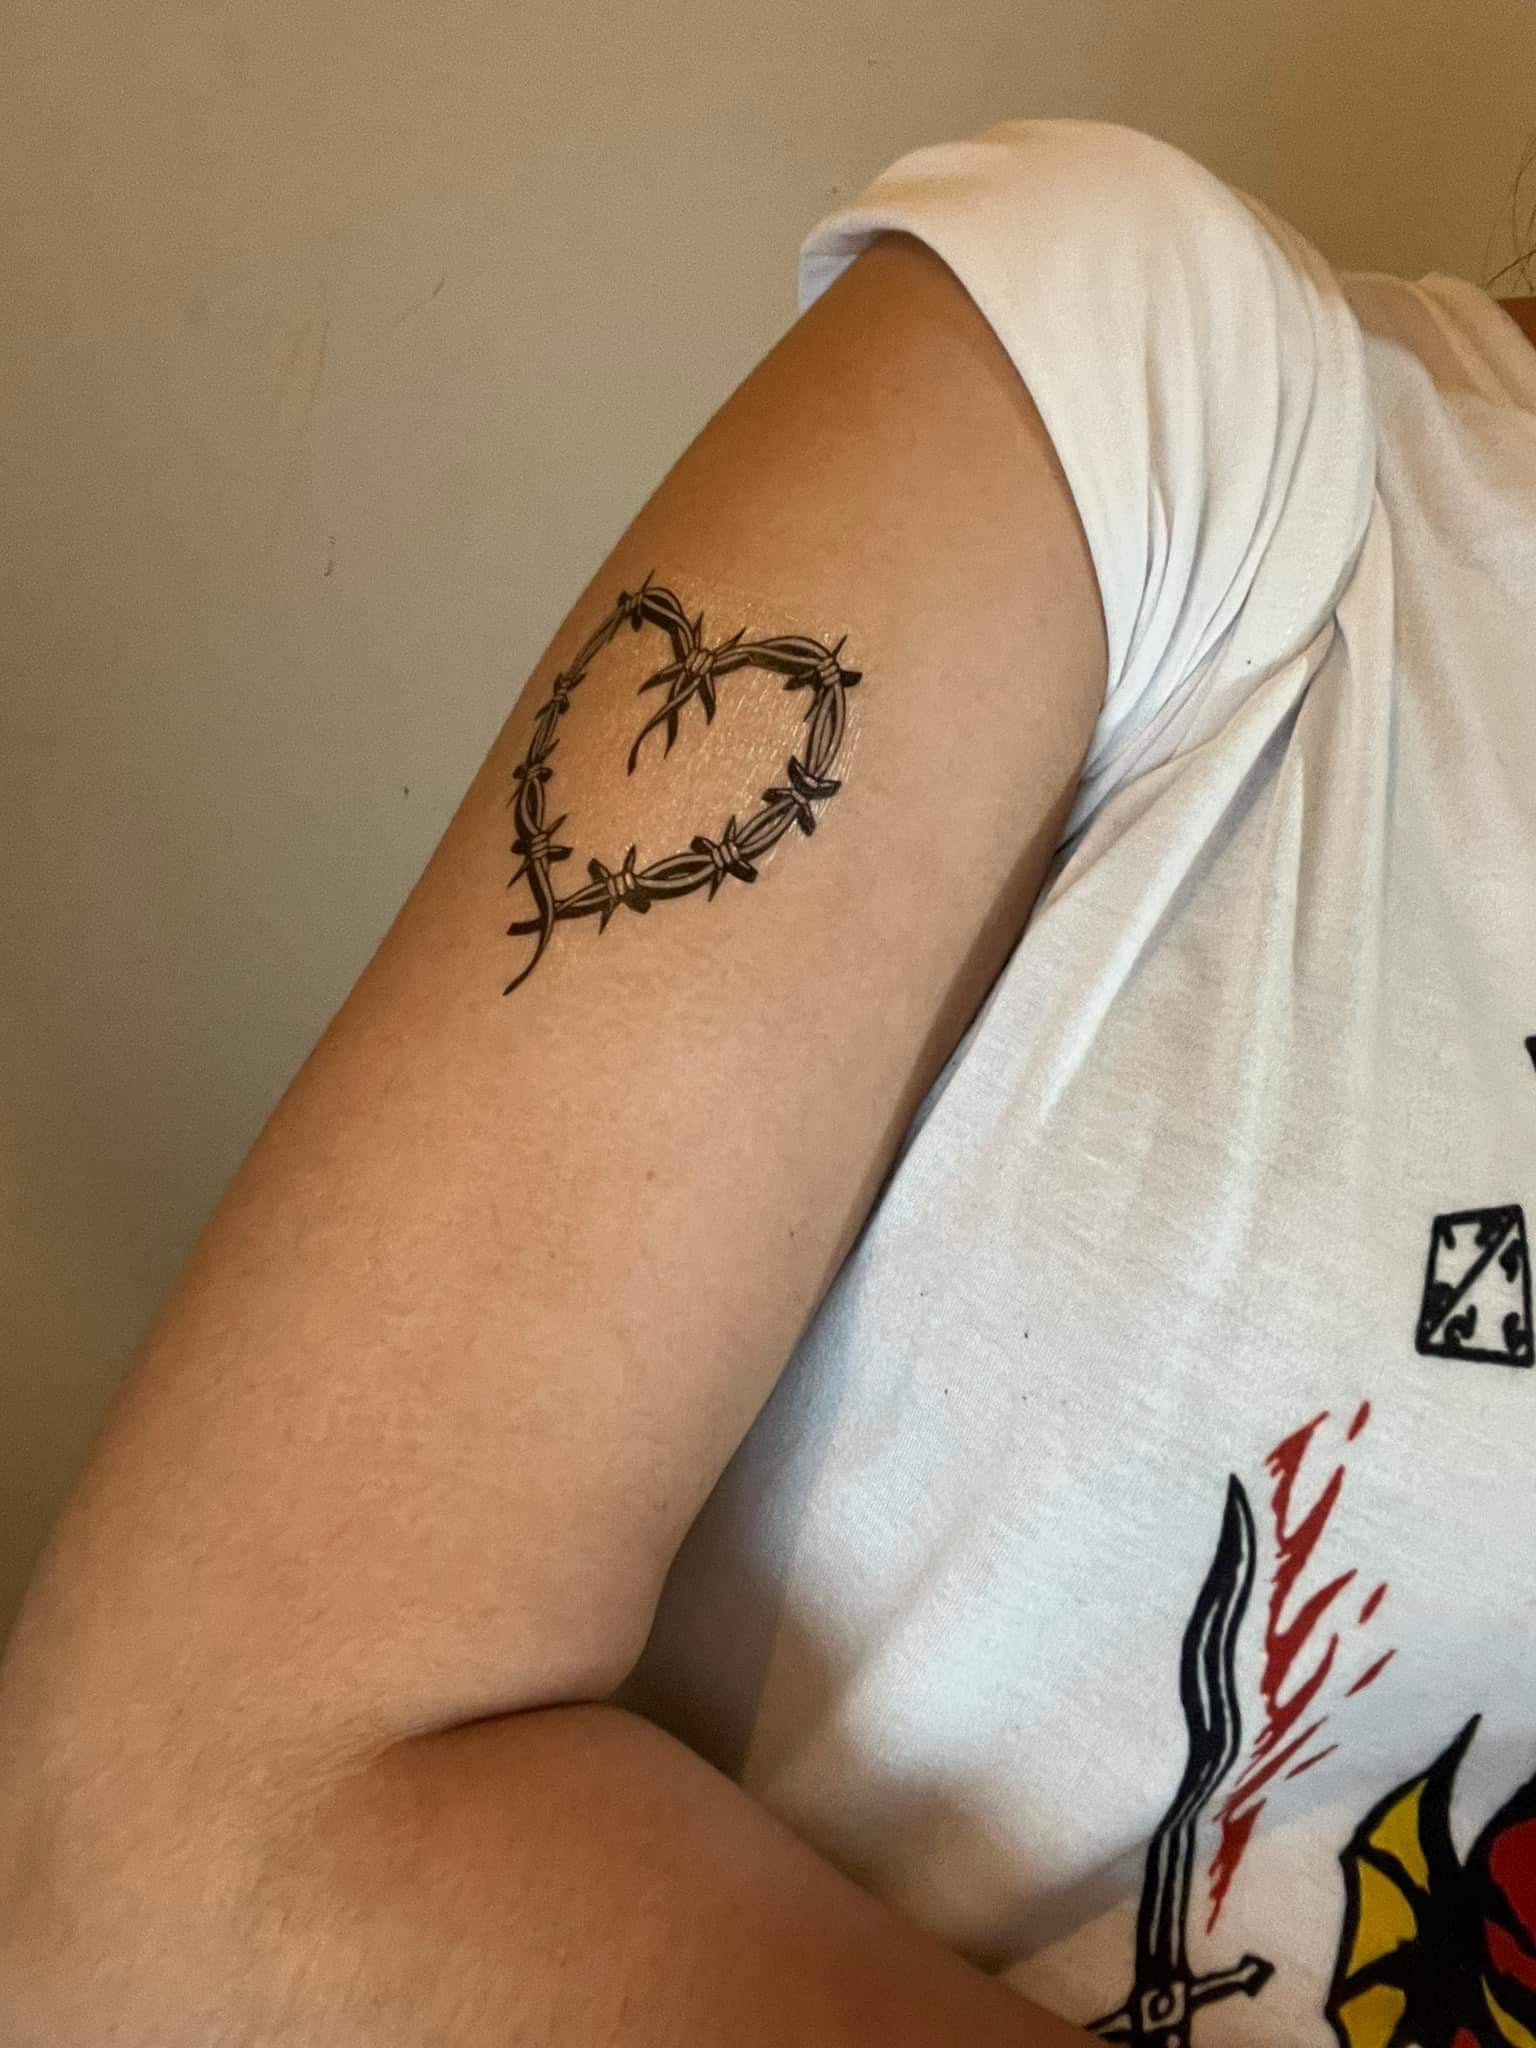 Karol G Inspired Heart Tattoo Restocked picture